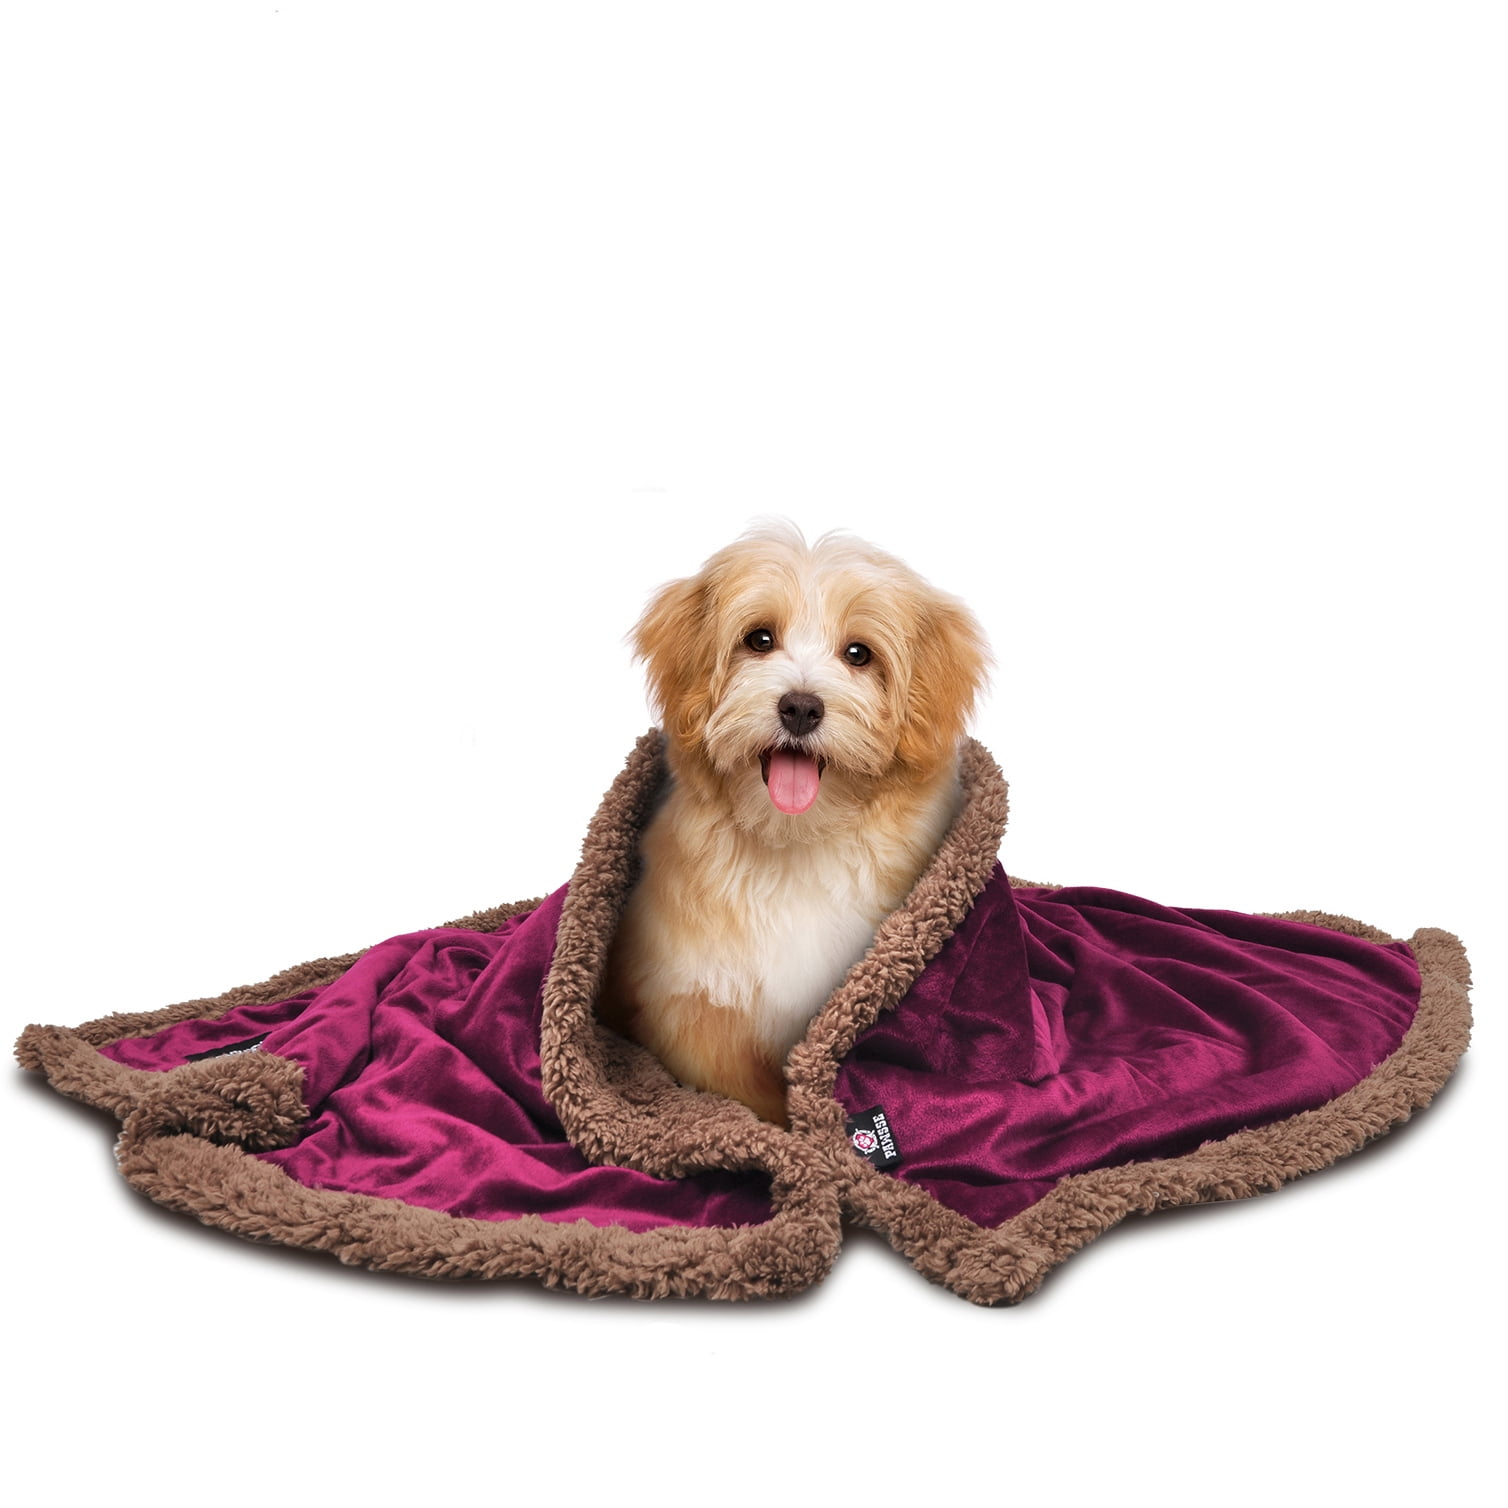 Paw Print Medium 30x20 1 Pack 3 Puppy Dog Blankets Super Soft Warm Sleep Mat Fluffy Premium Fleece Pet Blanket Flannel Throw for Dog Puppy Cat